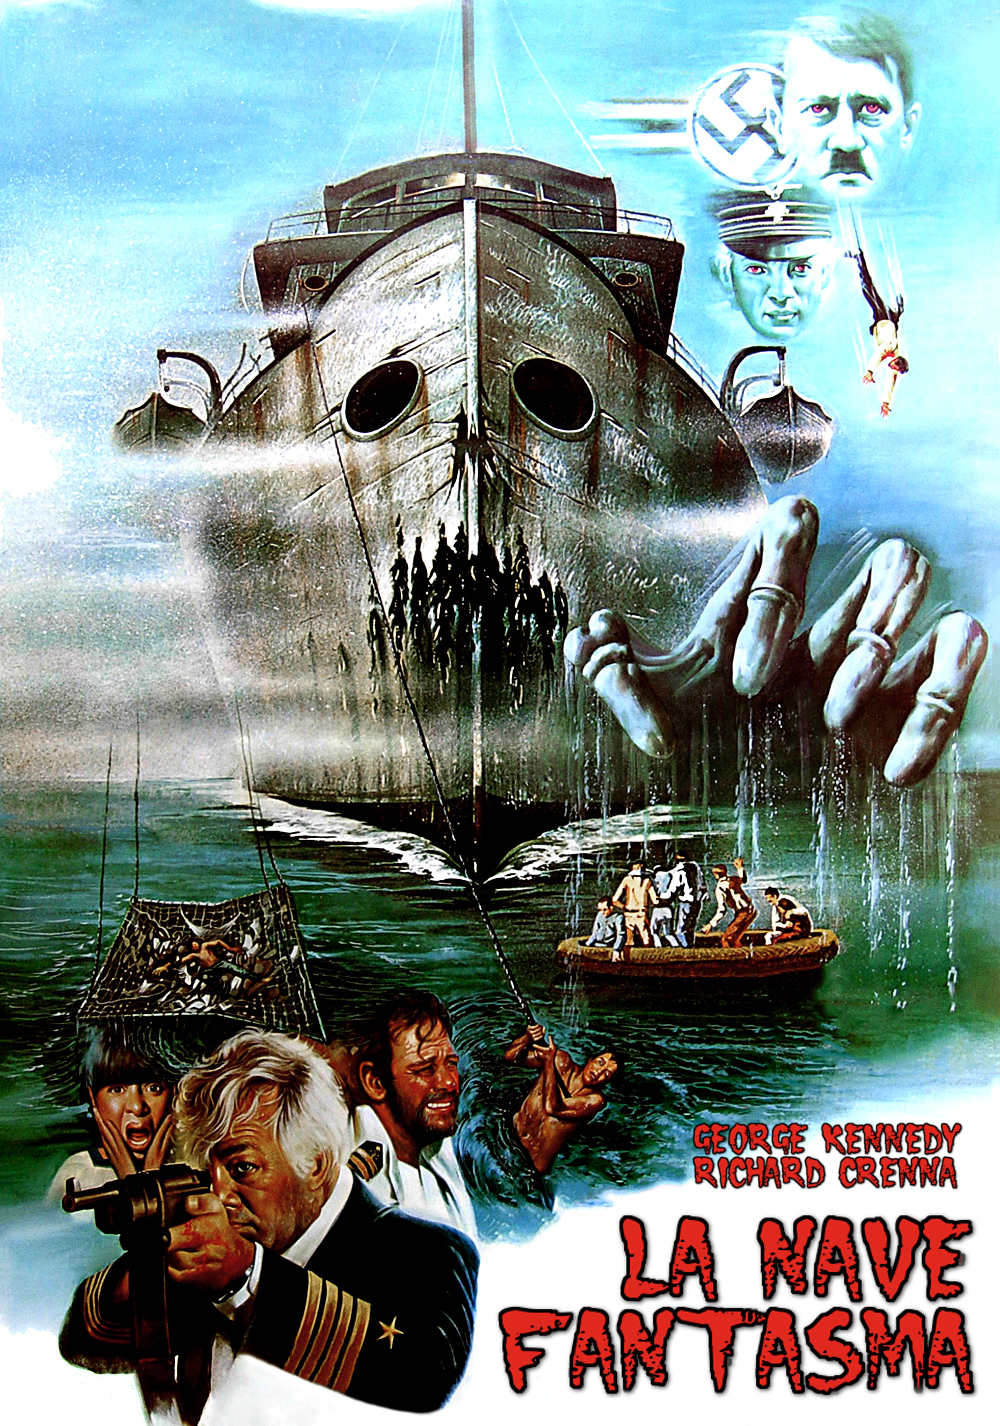 La nave fantasma [HD] (1980)